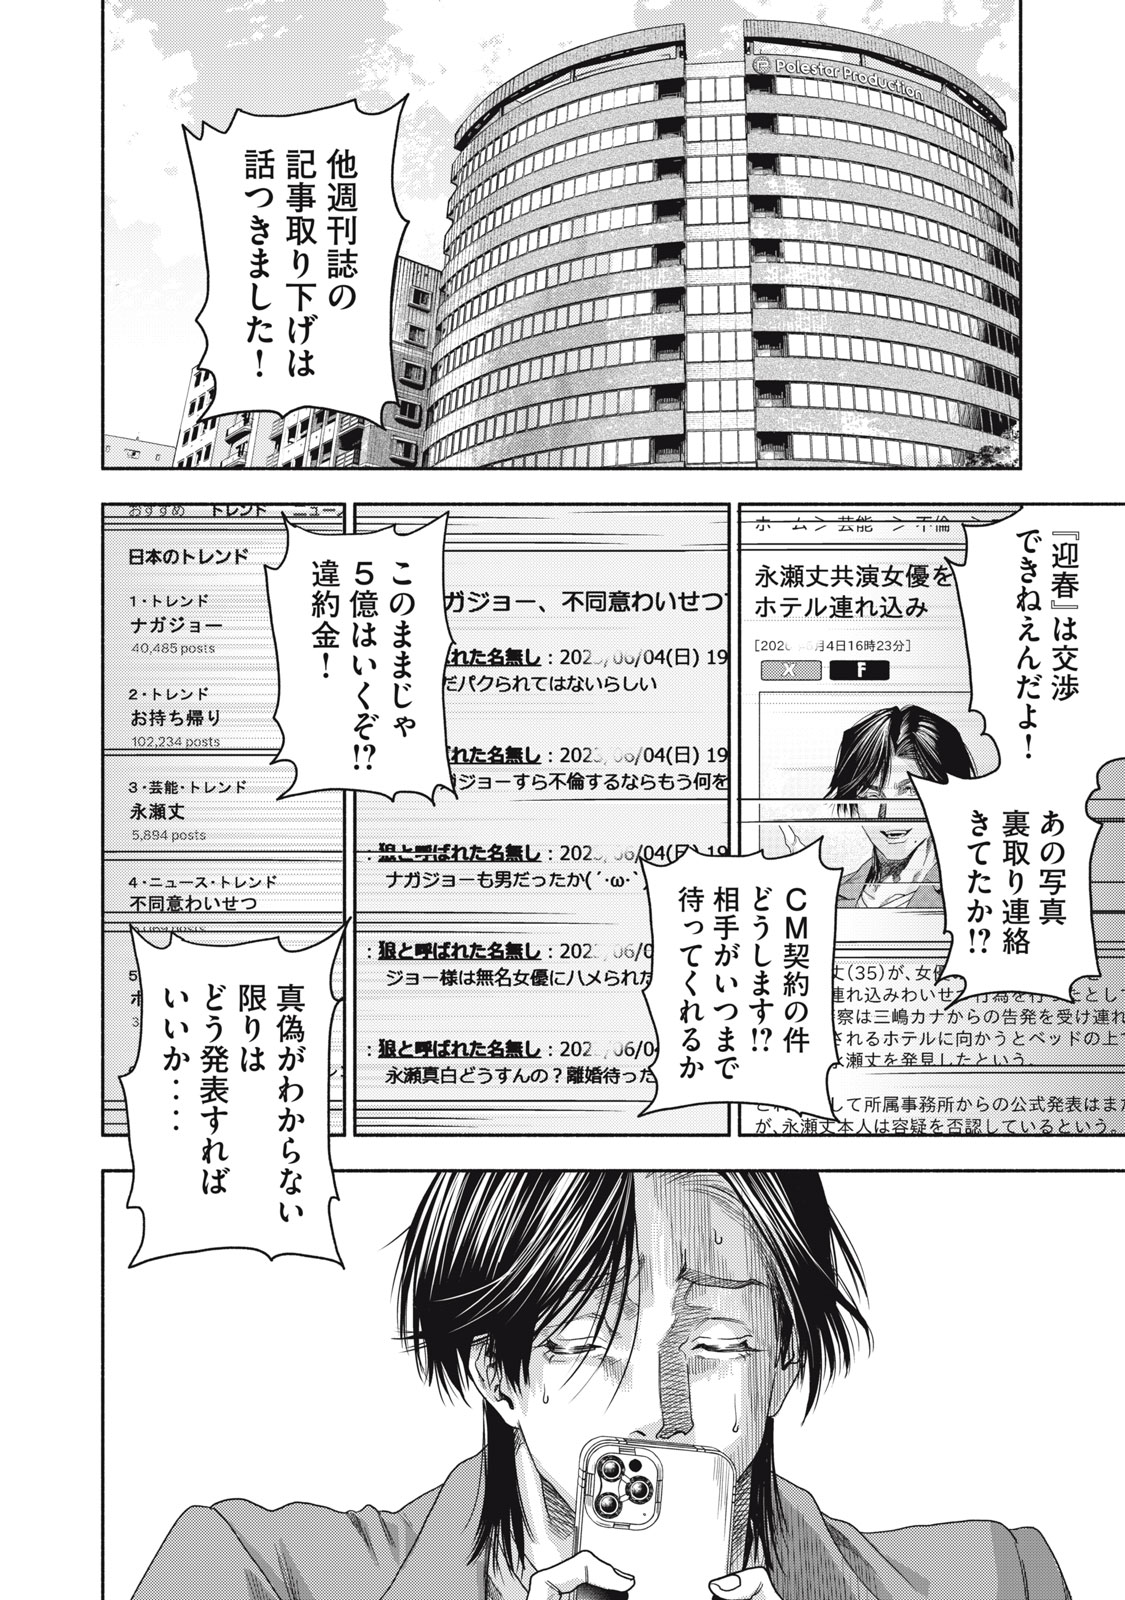 Rikon Shinai Otoko CASE 2 - Chapter 1 - Page 30